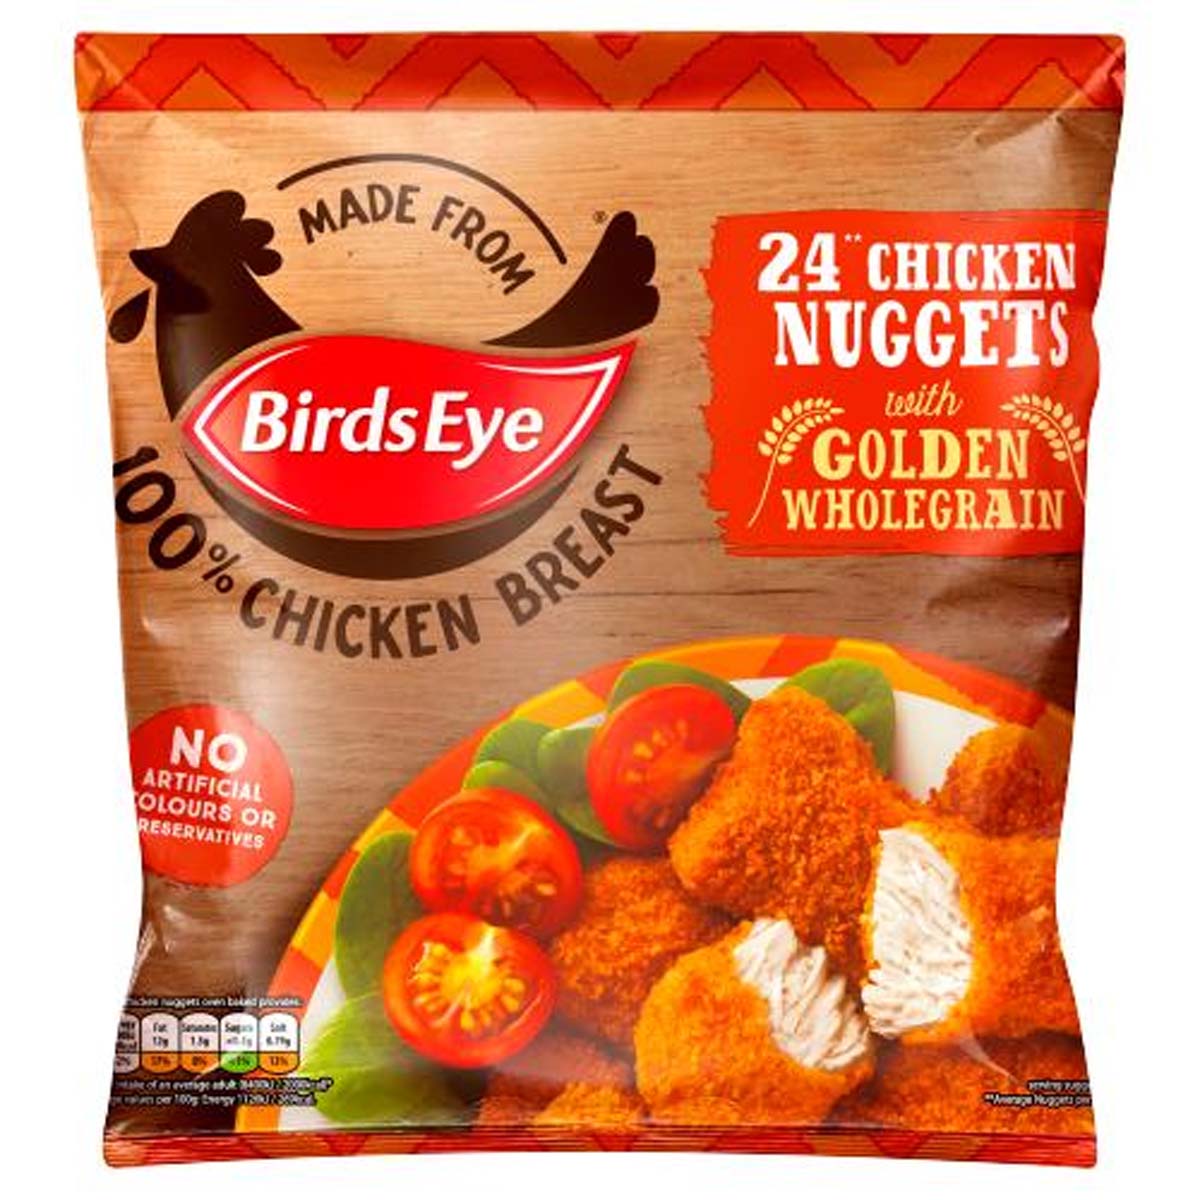 Birds Eye - 24 Chicken Nuggets with Golden Wholegrain - 379g - Continental Food Store